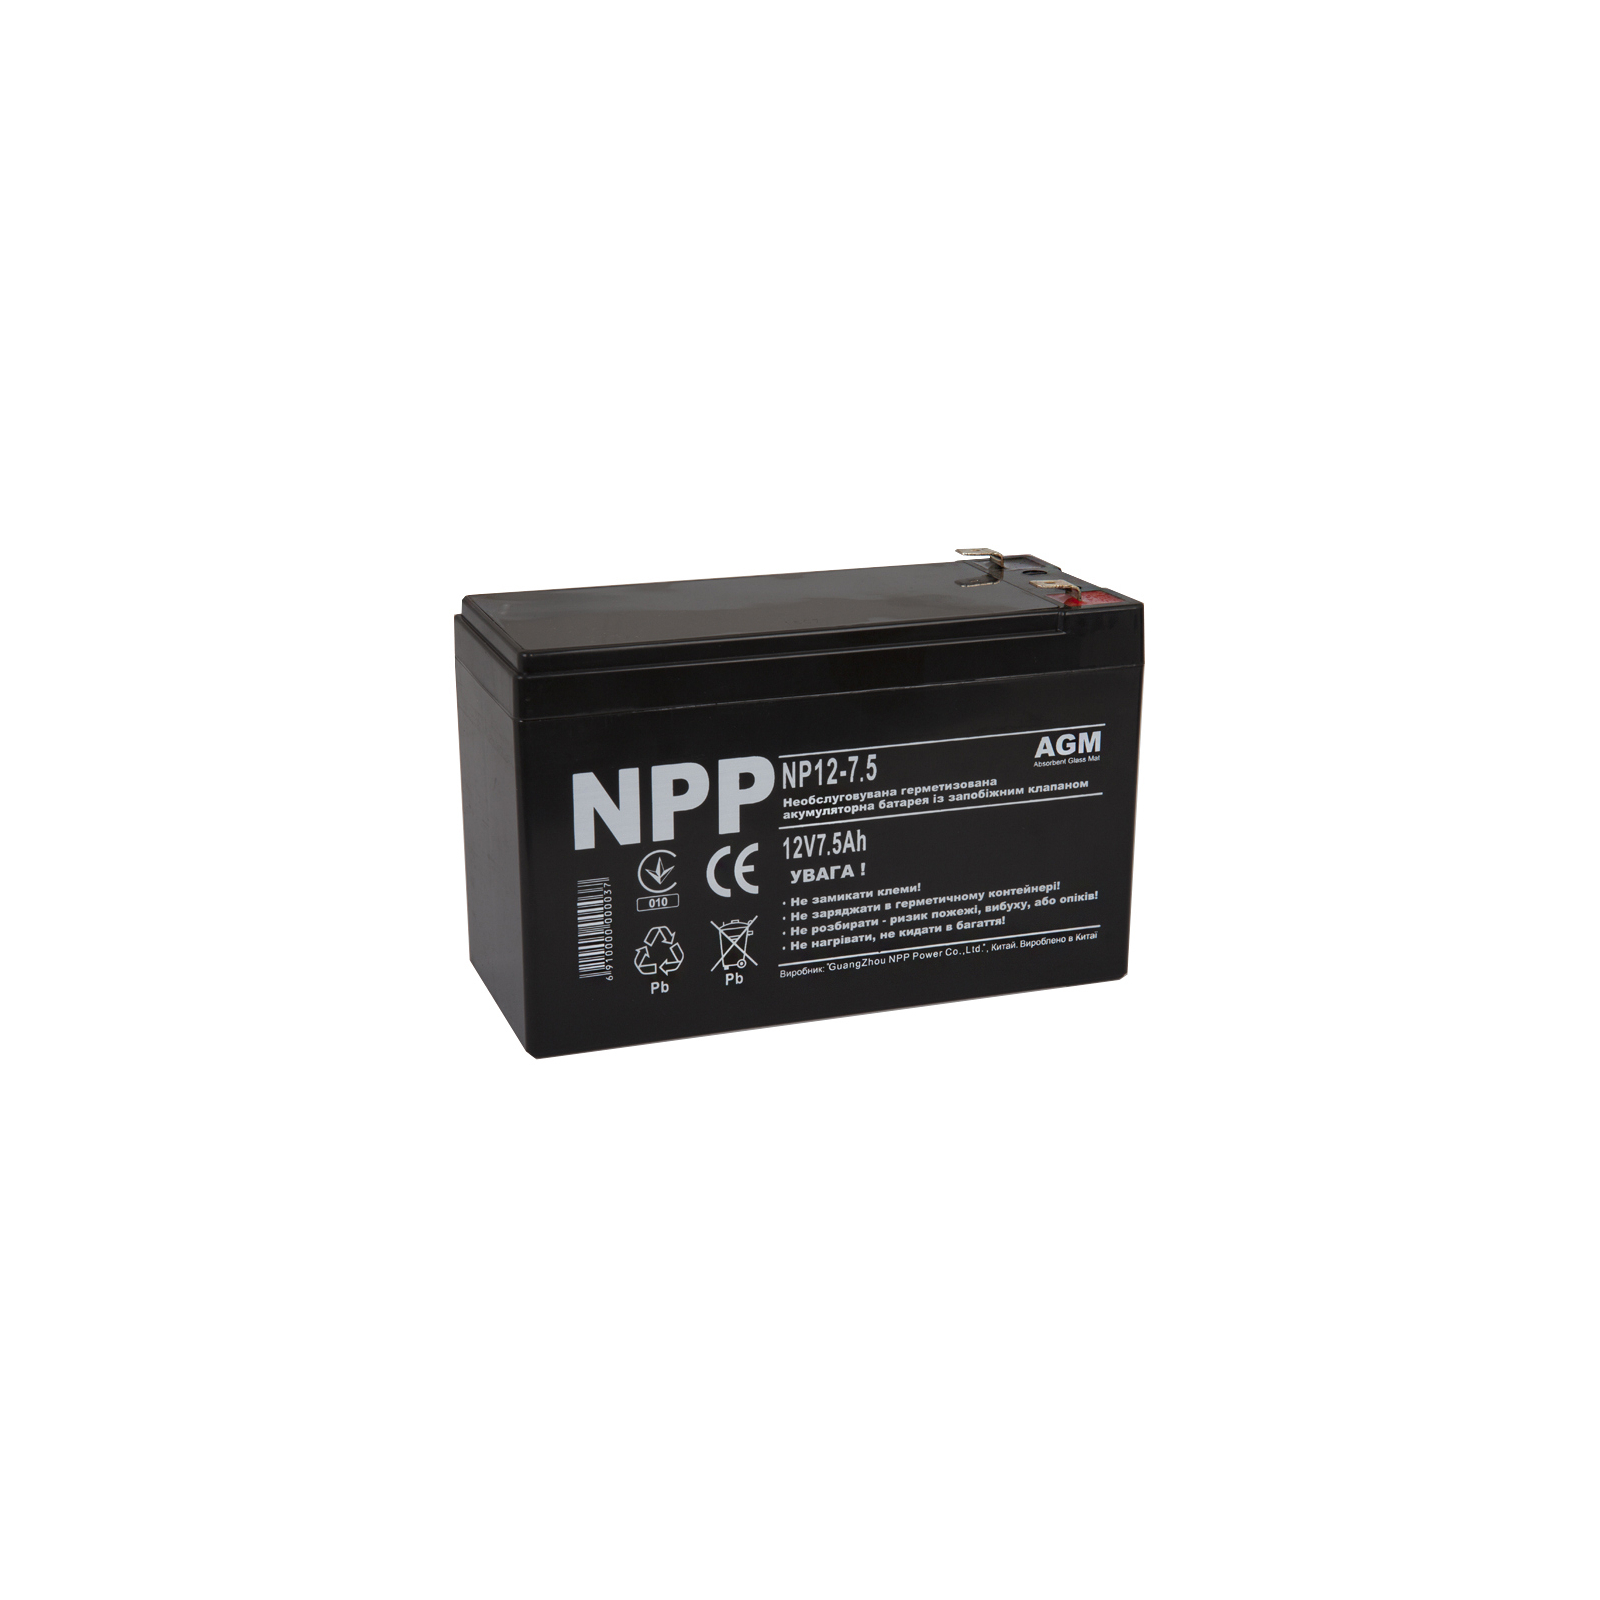 Батарея к ИБП NPP 12В 7.5 Ач (NP12-7.5)